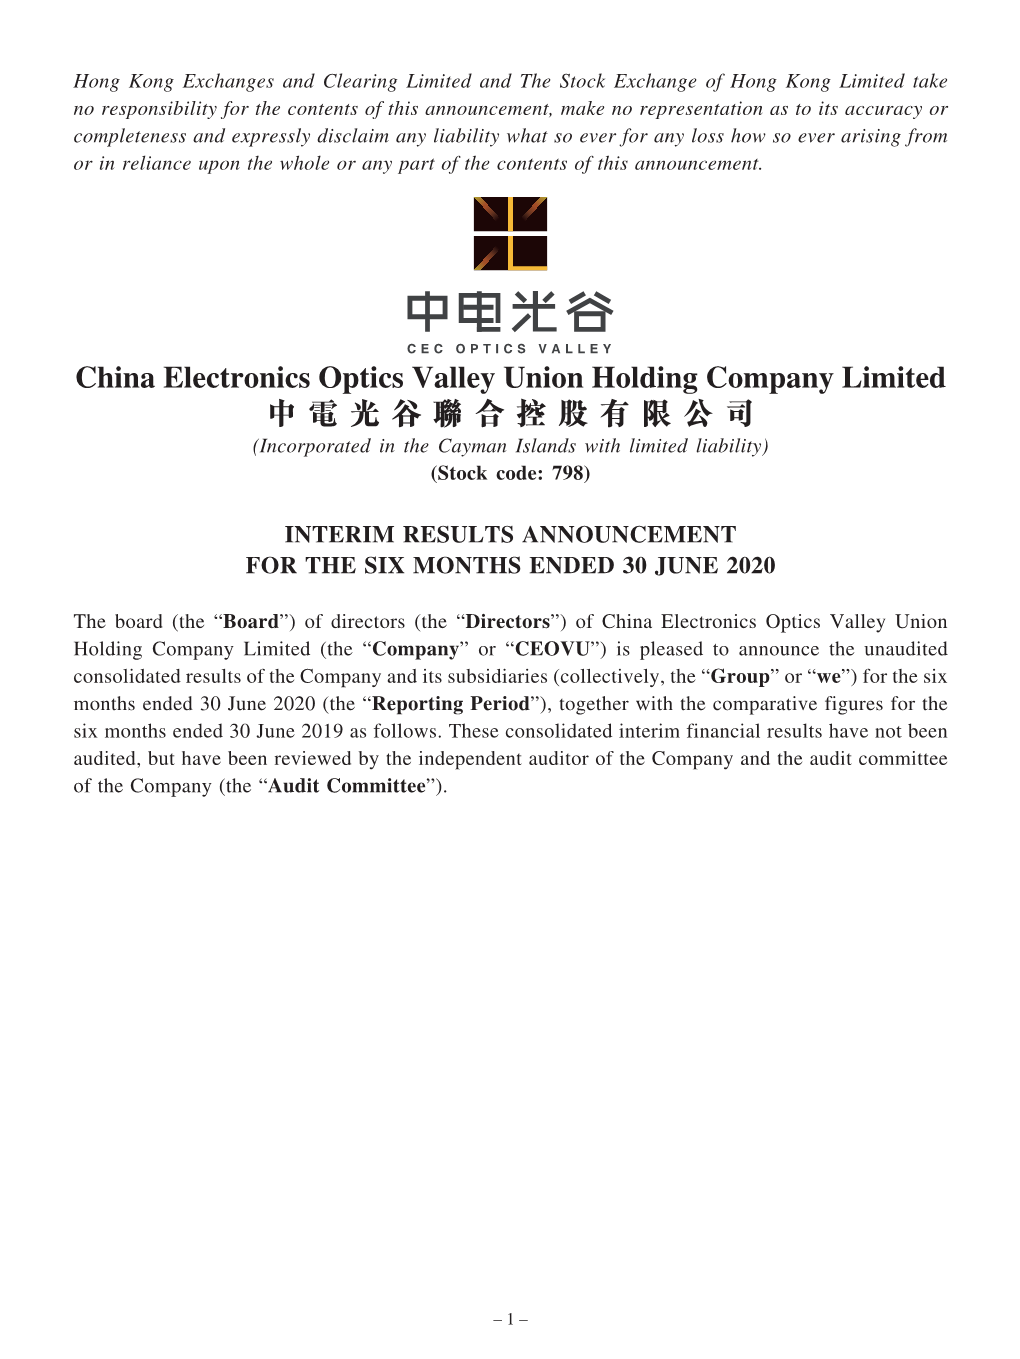 China Electronics Optics Valley Union Holding Company Limited 中電光谷聯合控股有限公司 (Incorporatedin the Cayman Islands with Limited Liability) (Stock Code: 798)